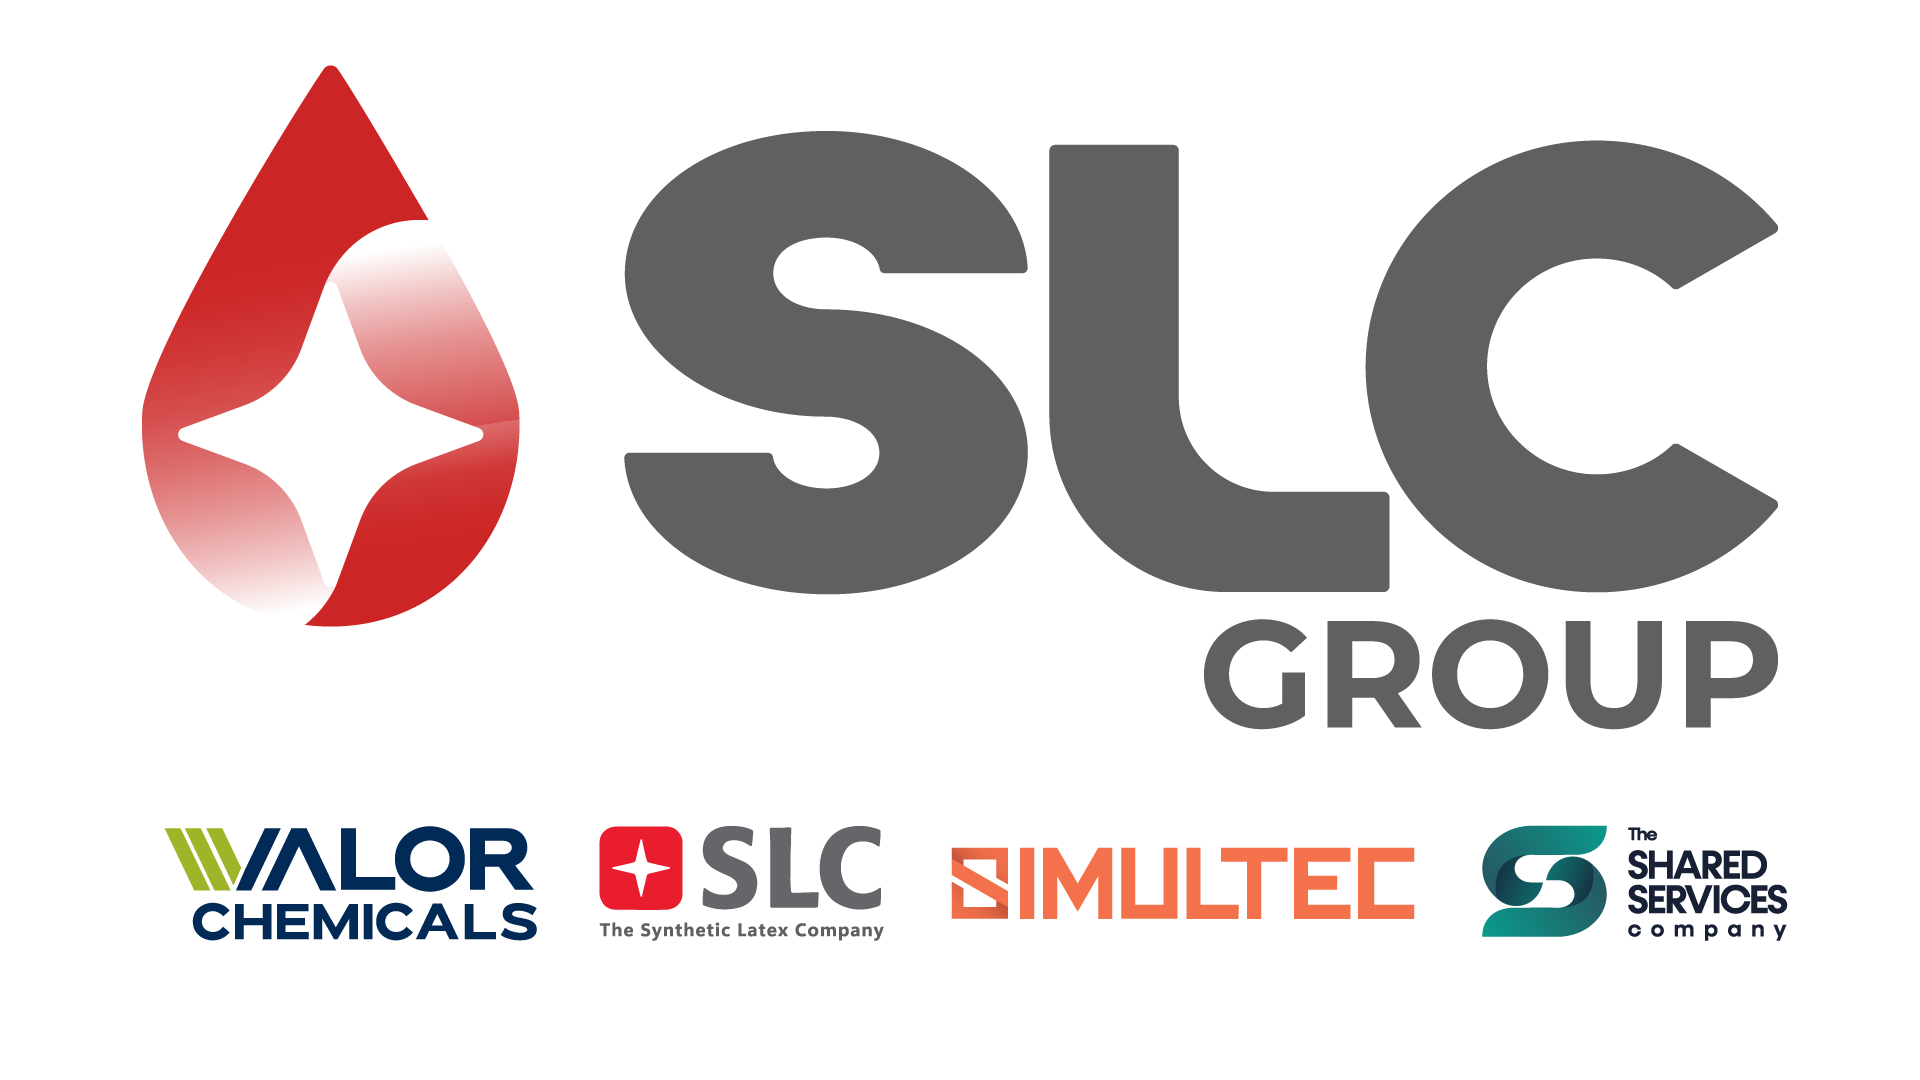 SLC - The Synthetic Latex Company